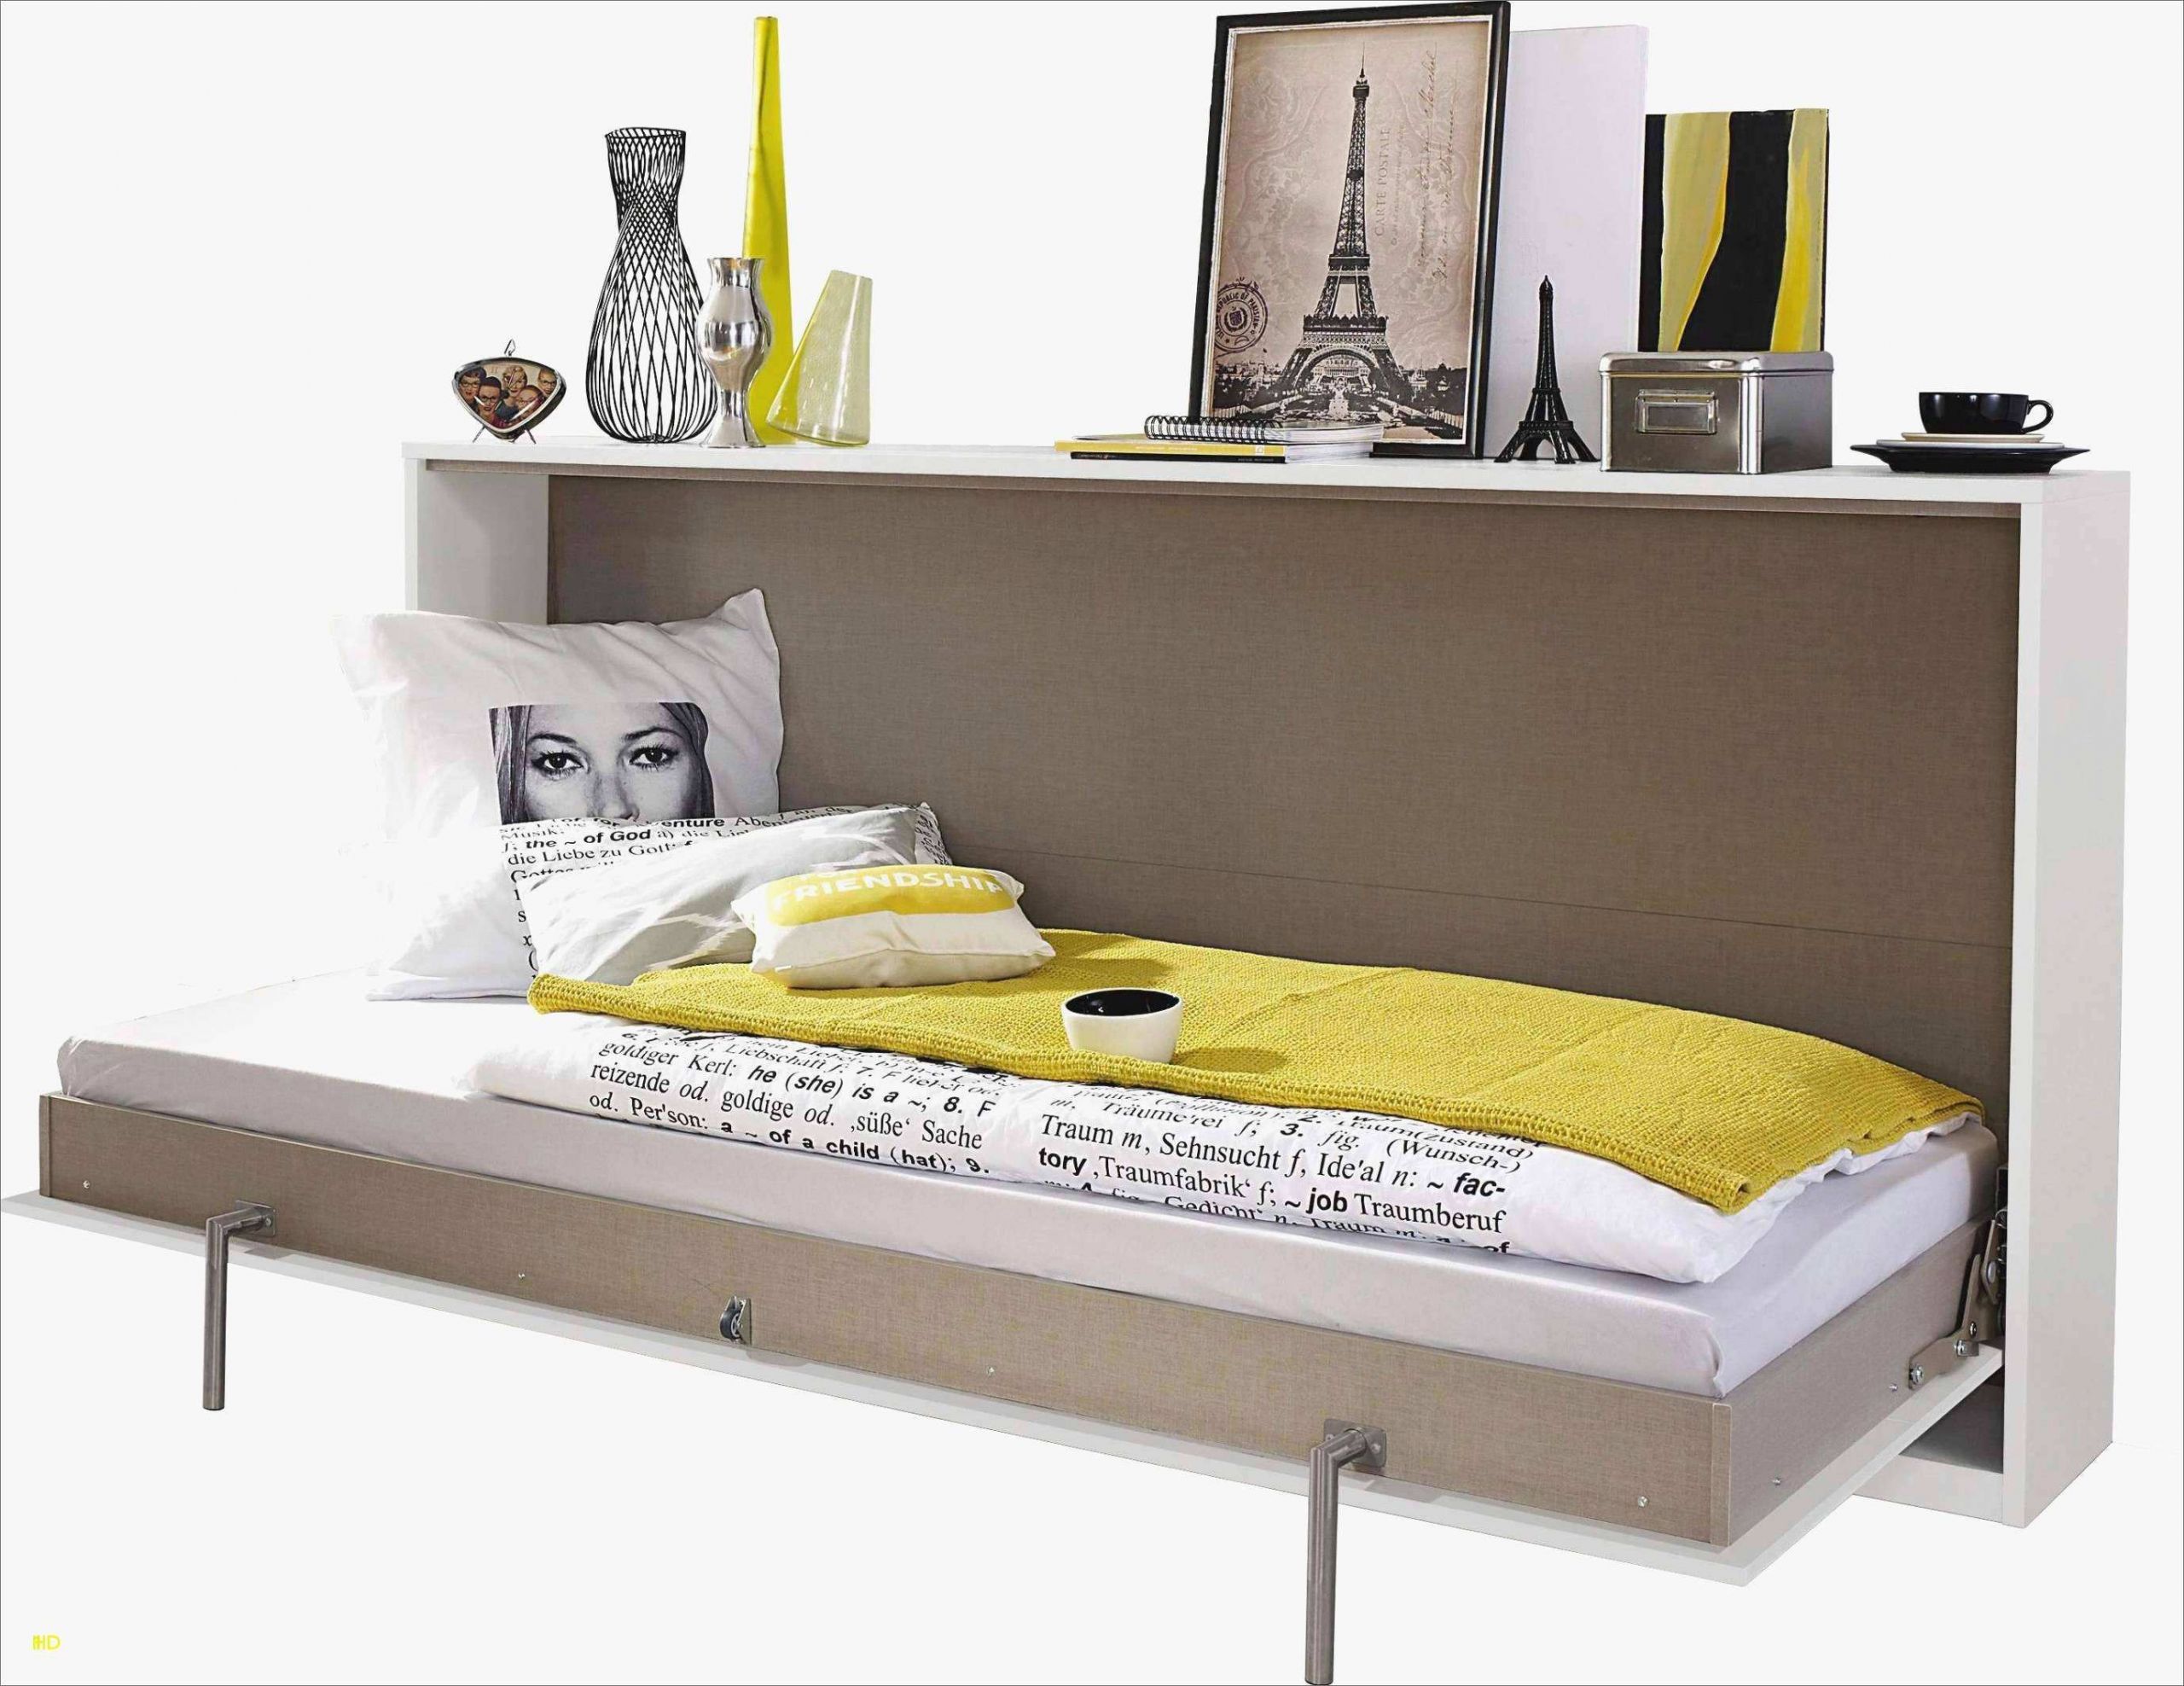 schone deko ideen frisch fresh schone deko ideen furs wohnzimmer inspirations of schone deko ideen